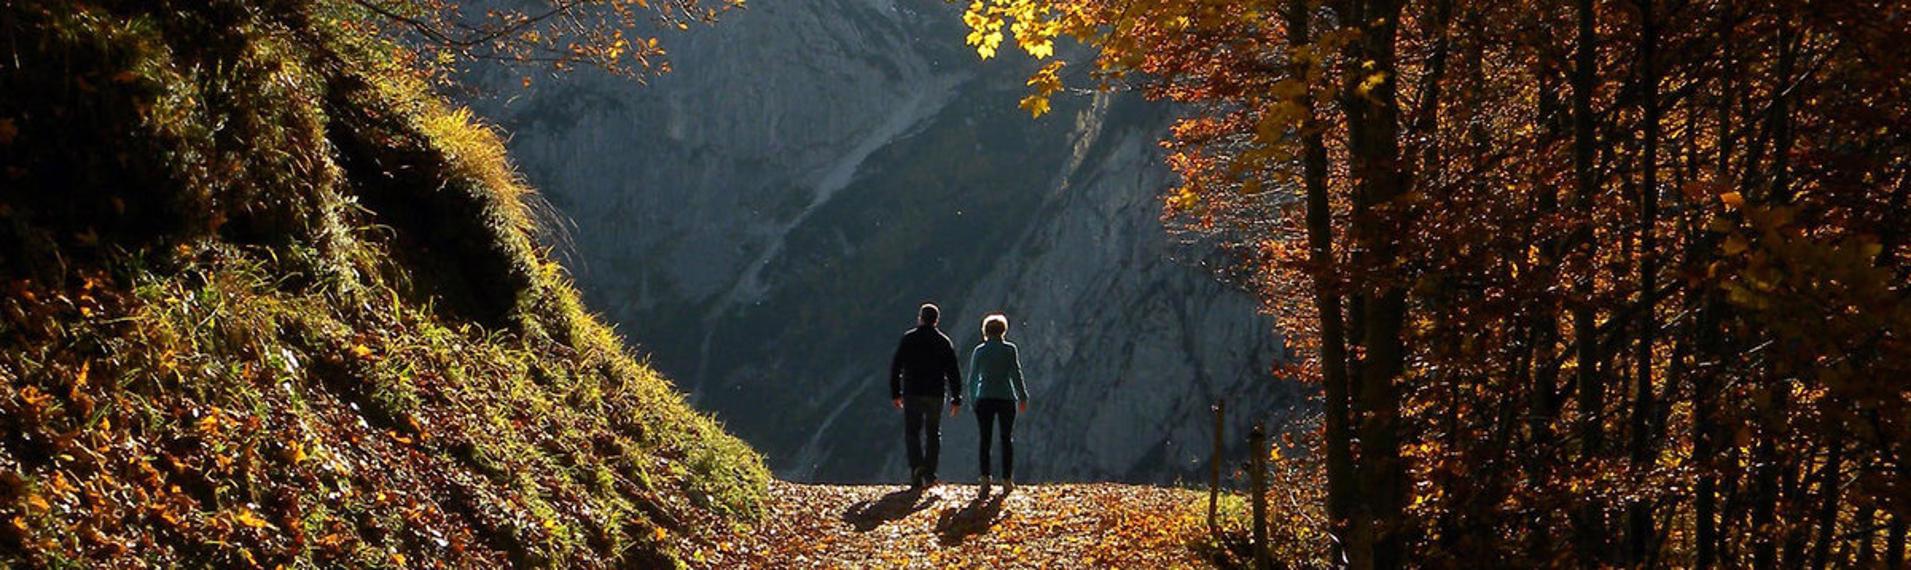 Checklist for a great autumn walk